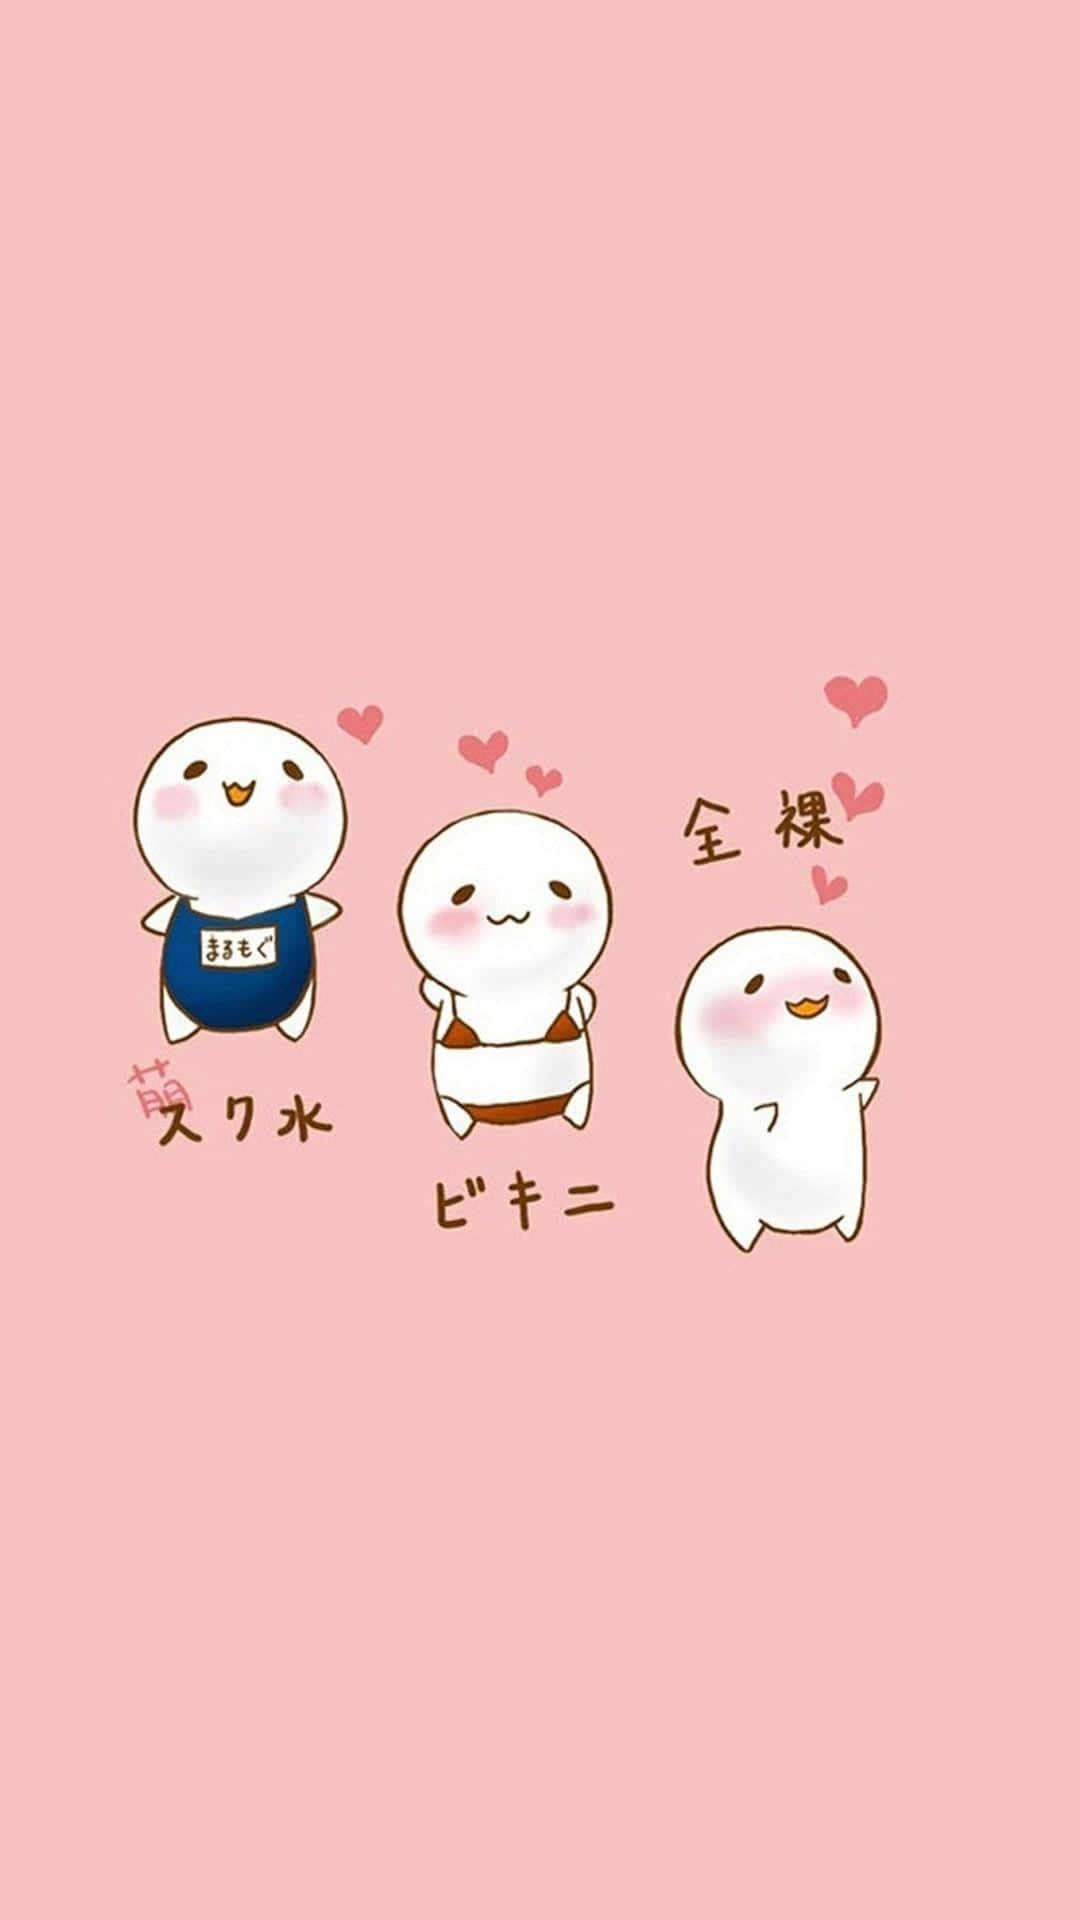 Kawaii Cartoon Characters Love Hearts Pink Background Wallpaper